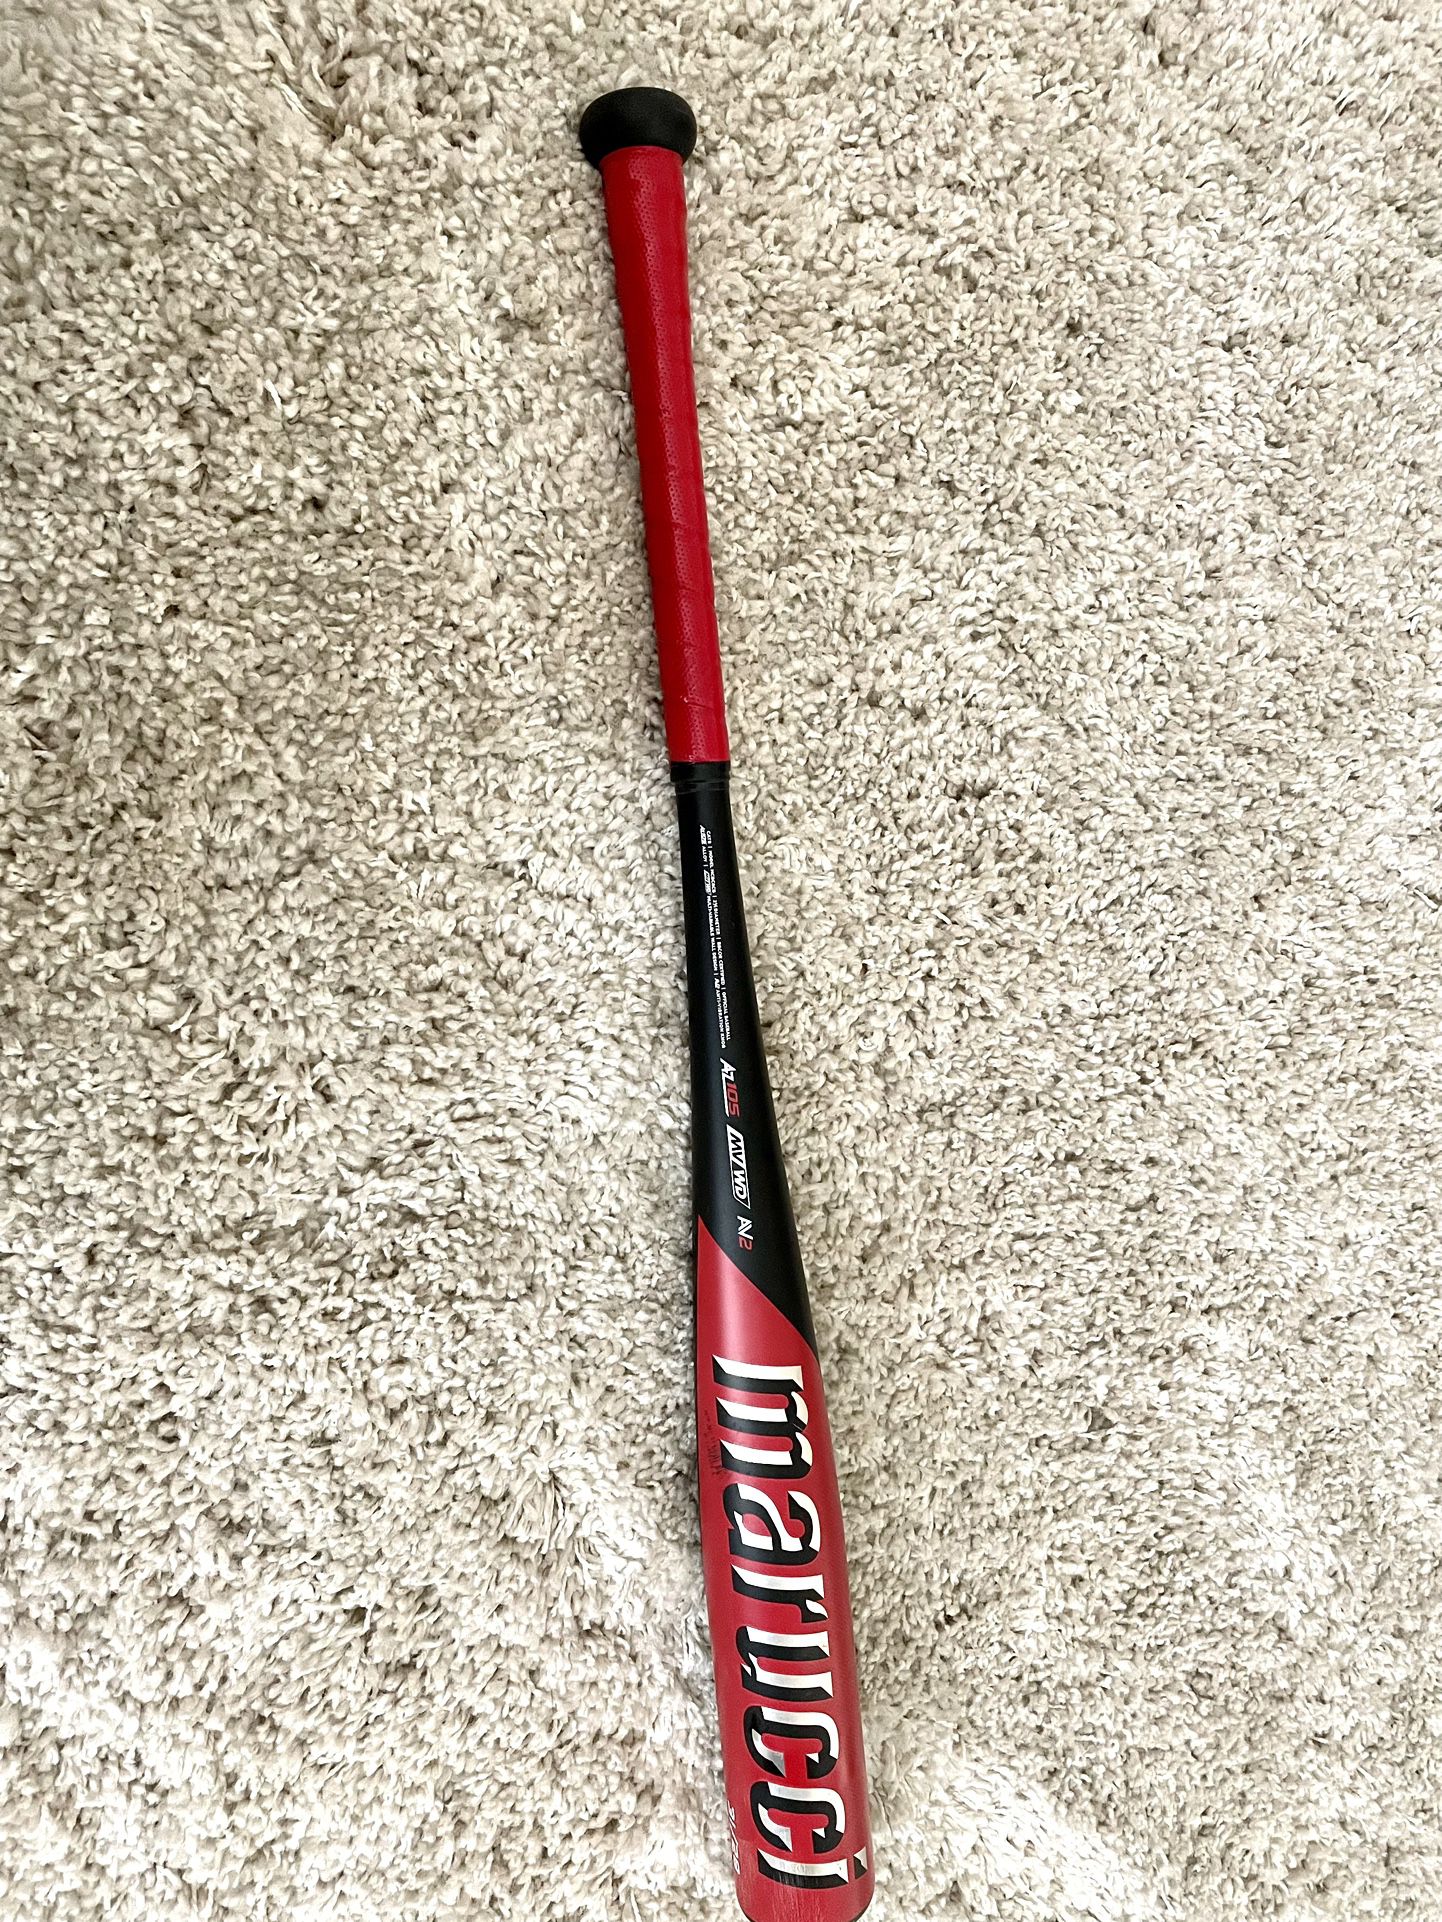 Marucci Baseball bat - New, Used one day